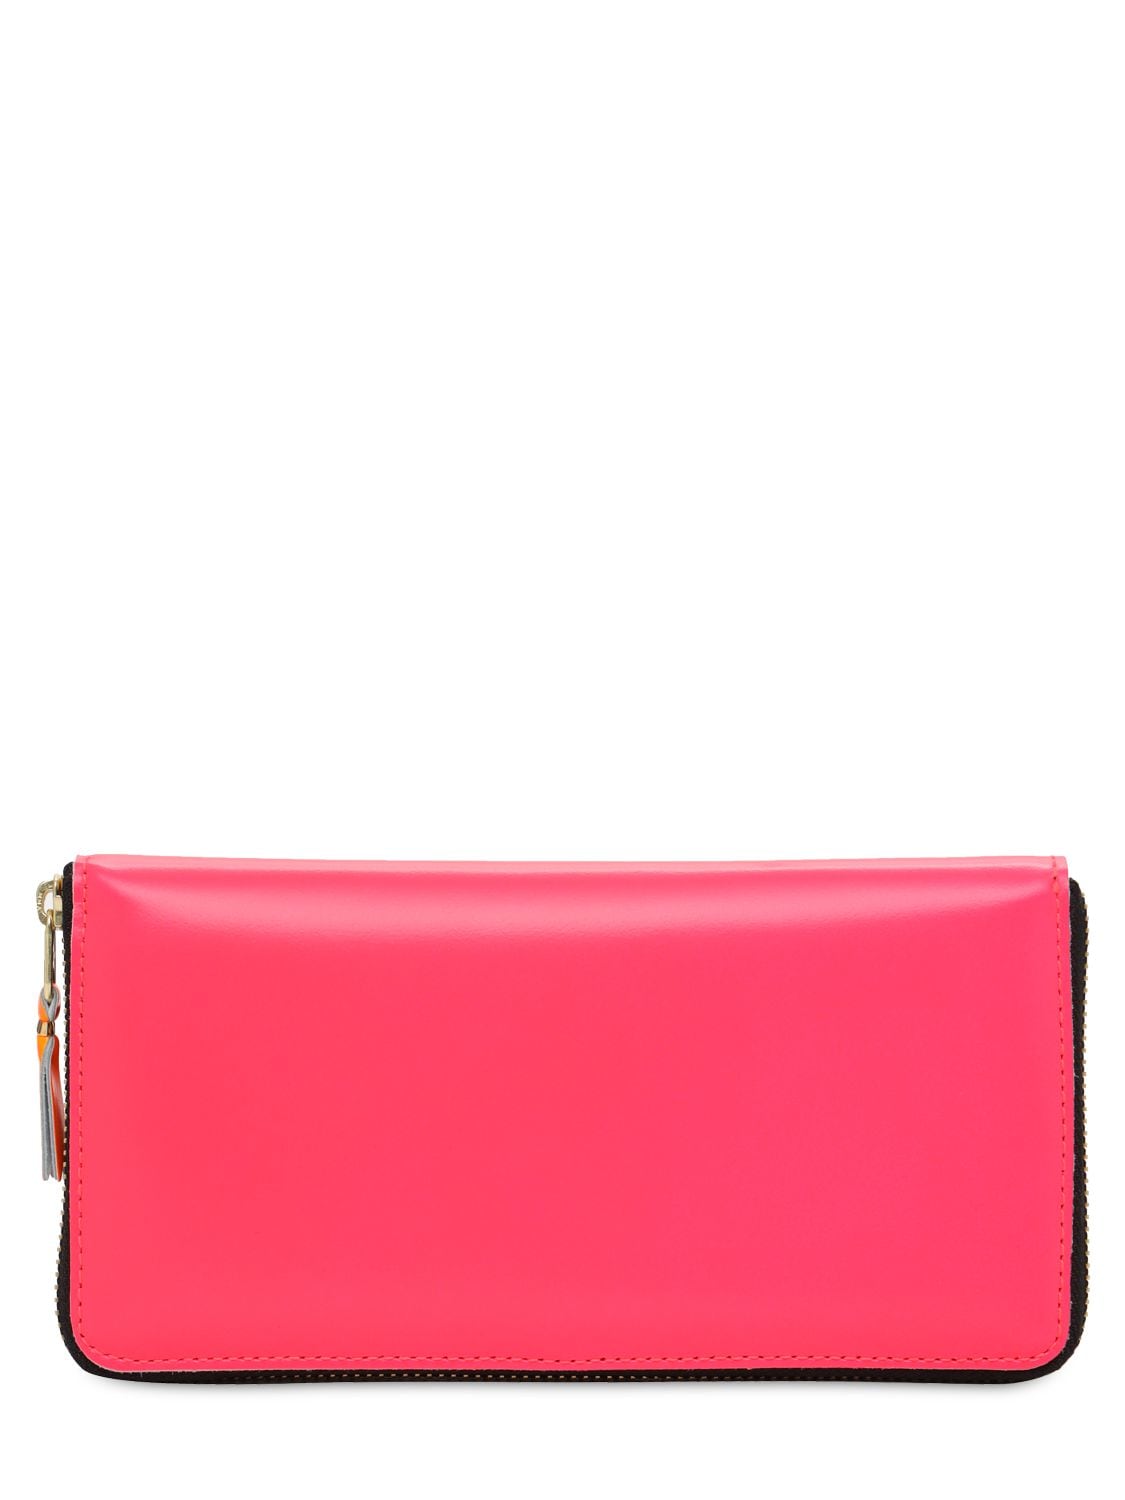 Comme Des Garçons Super Fluo Leather Zip Around Wallet In Pink